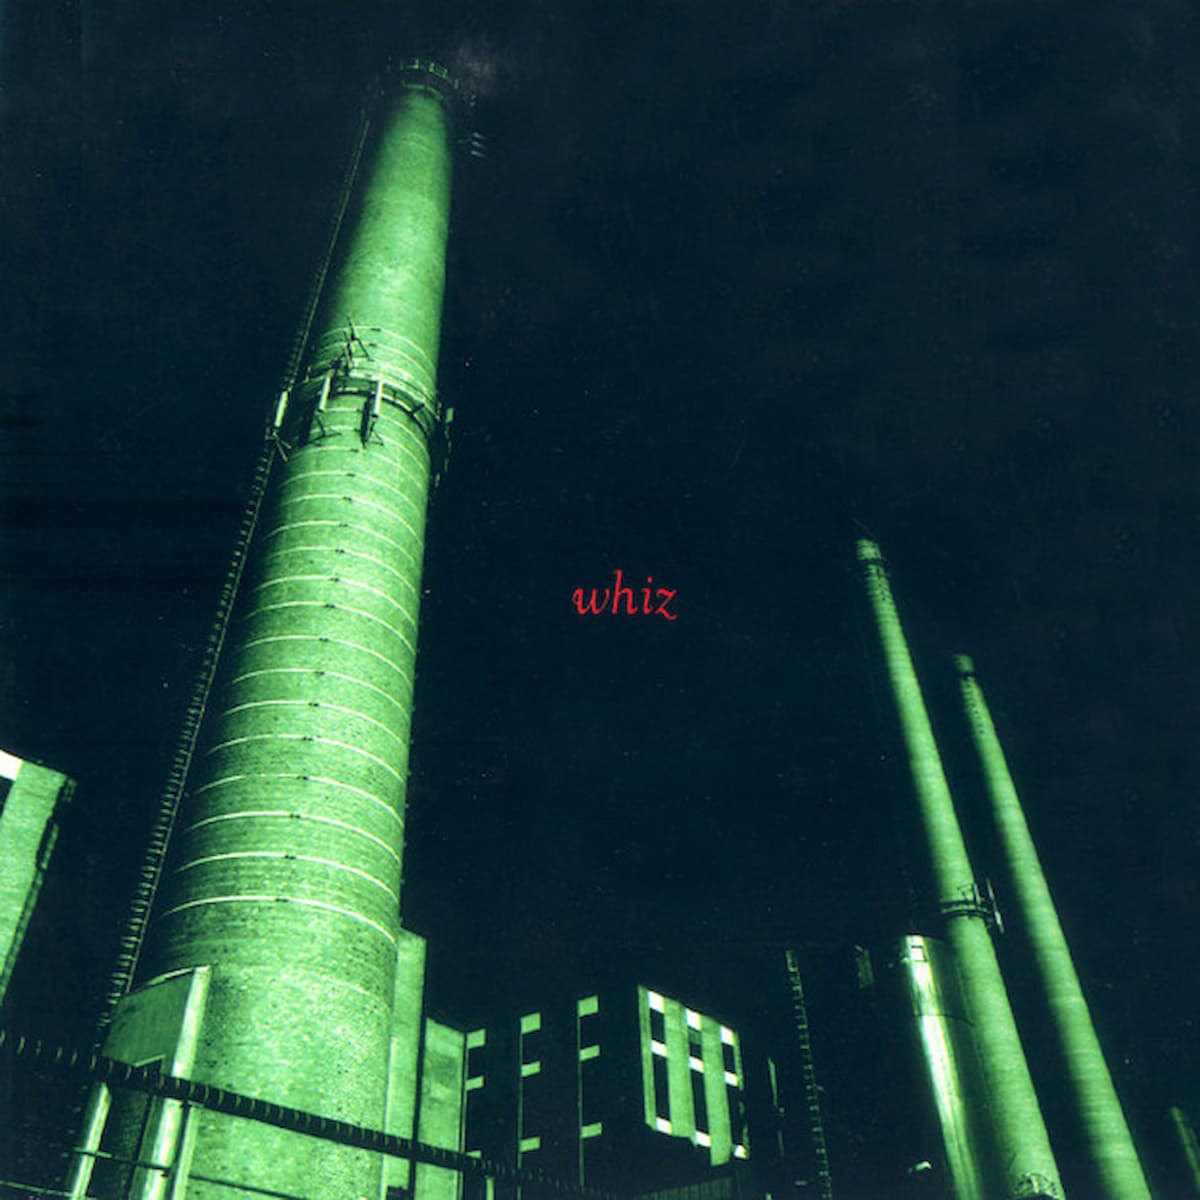 Record cover artwork for Whiz